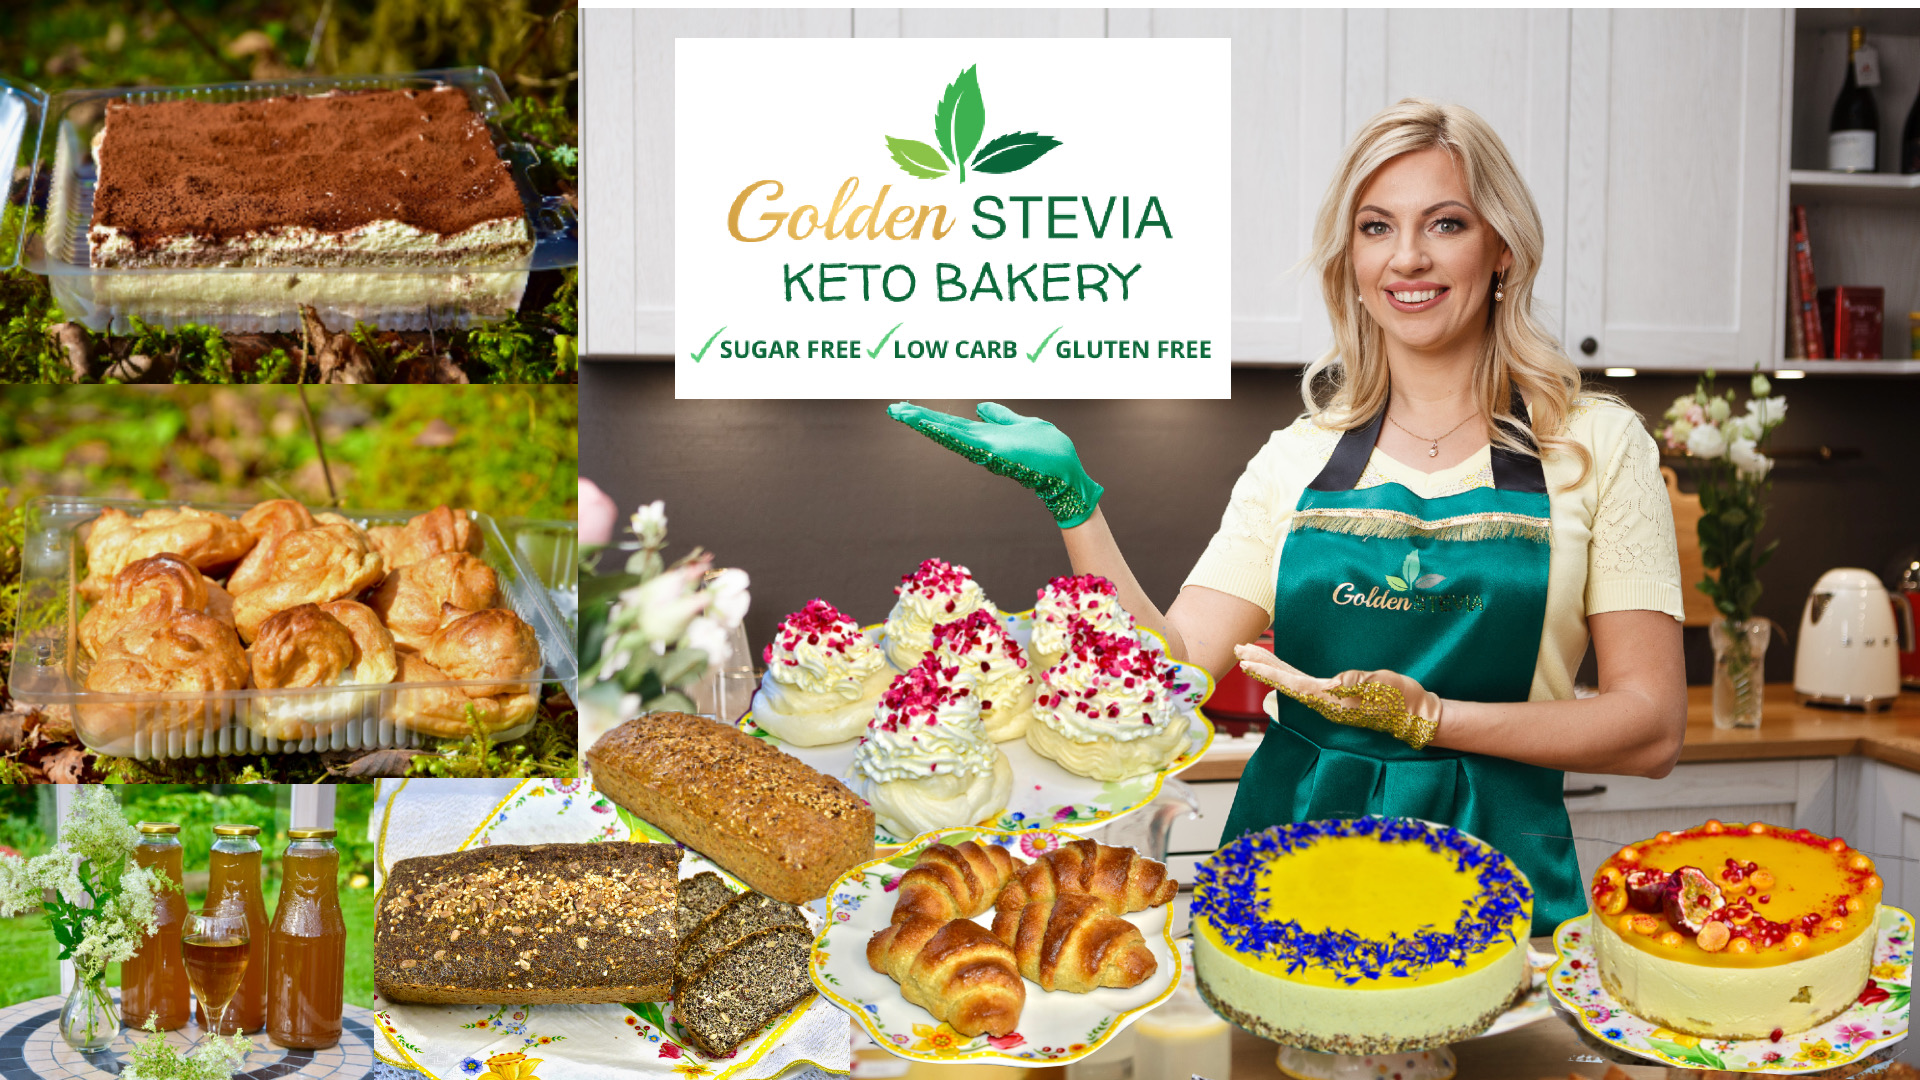 Annika Urm opens online Golden Stevia Keto Bakery, Sugar free, Gluten free, low carb